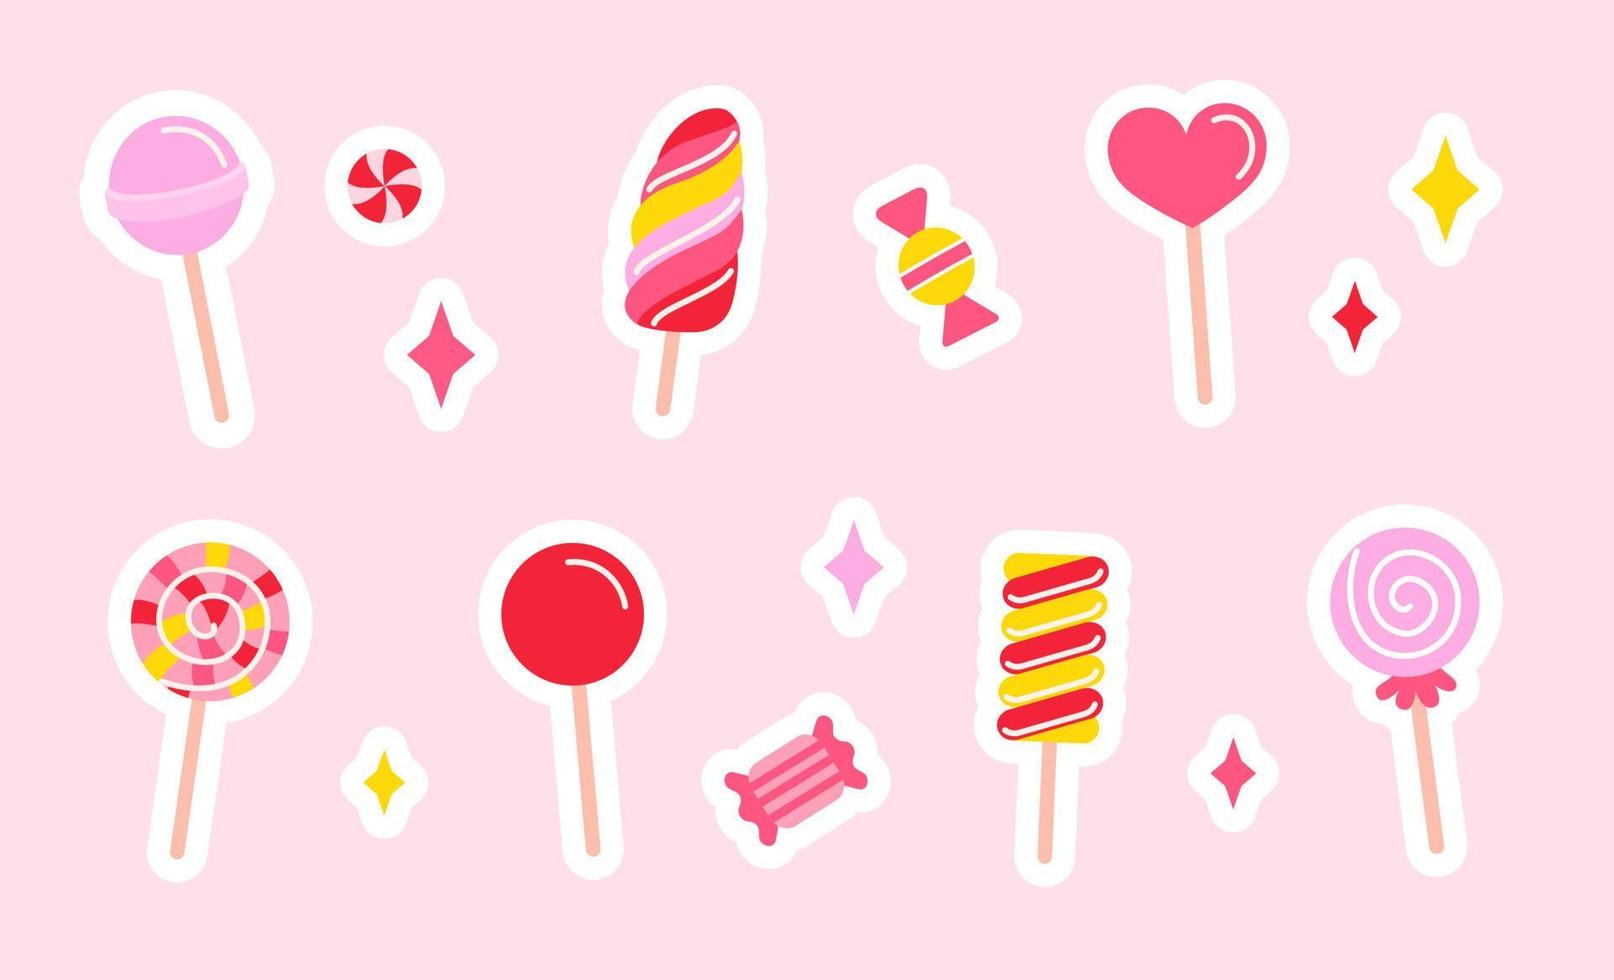 snoepjes, lolly en karamel Aan stokjes in vlak stijl. stickers set. vector illustratie